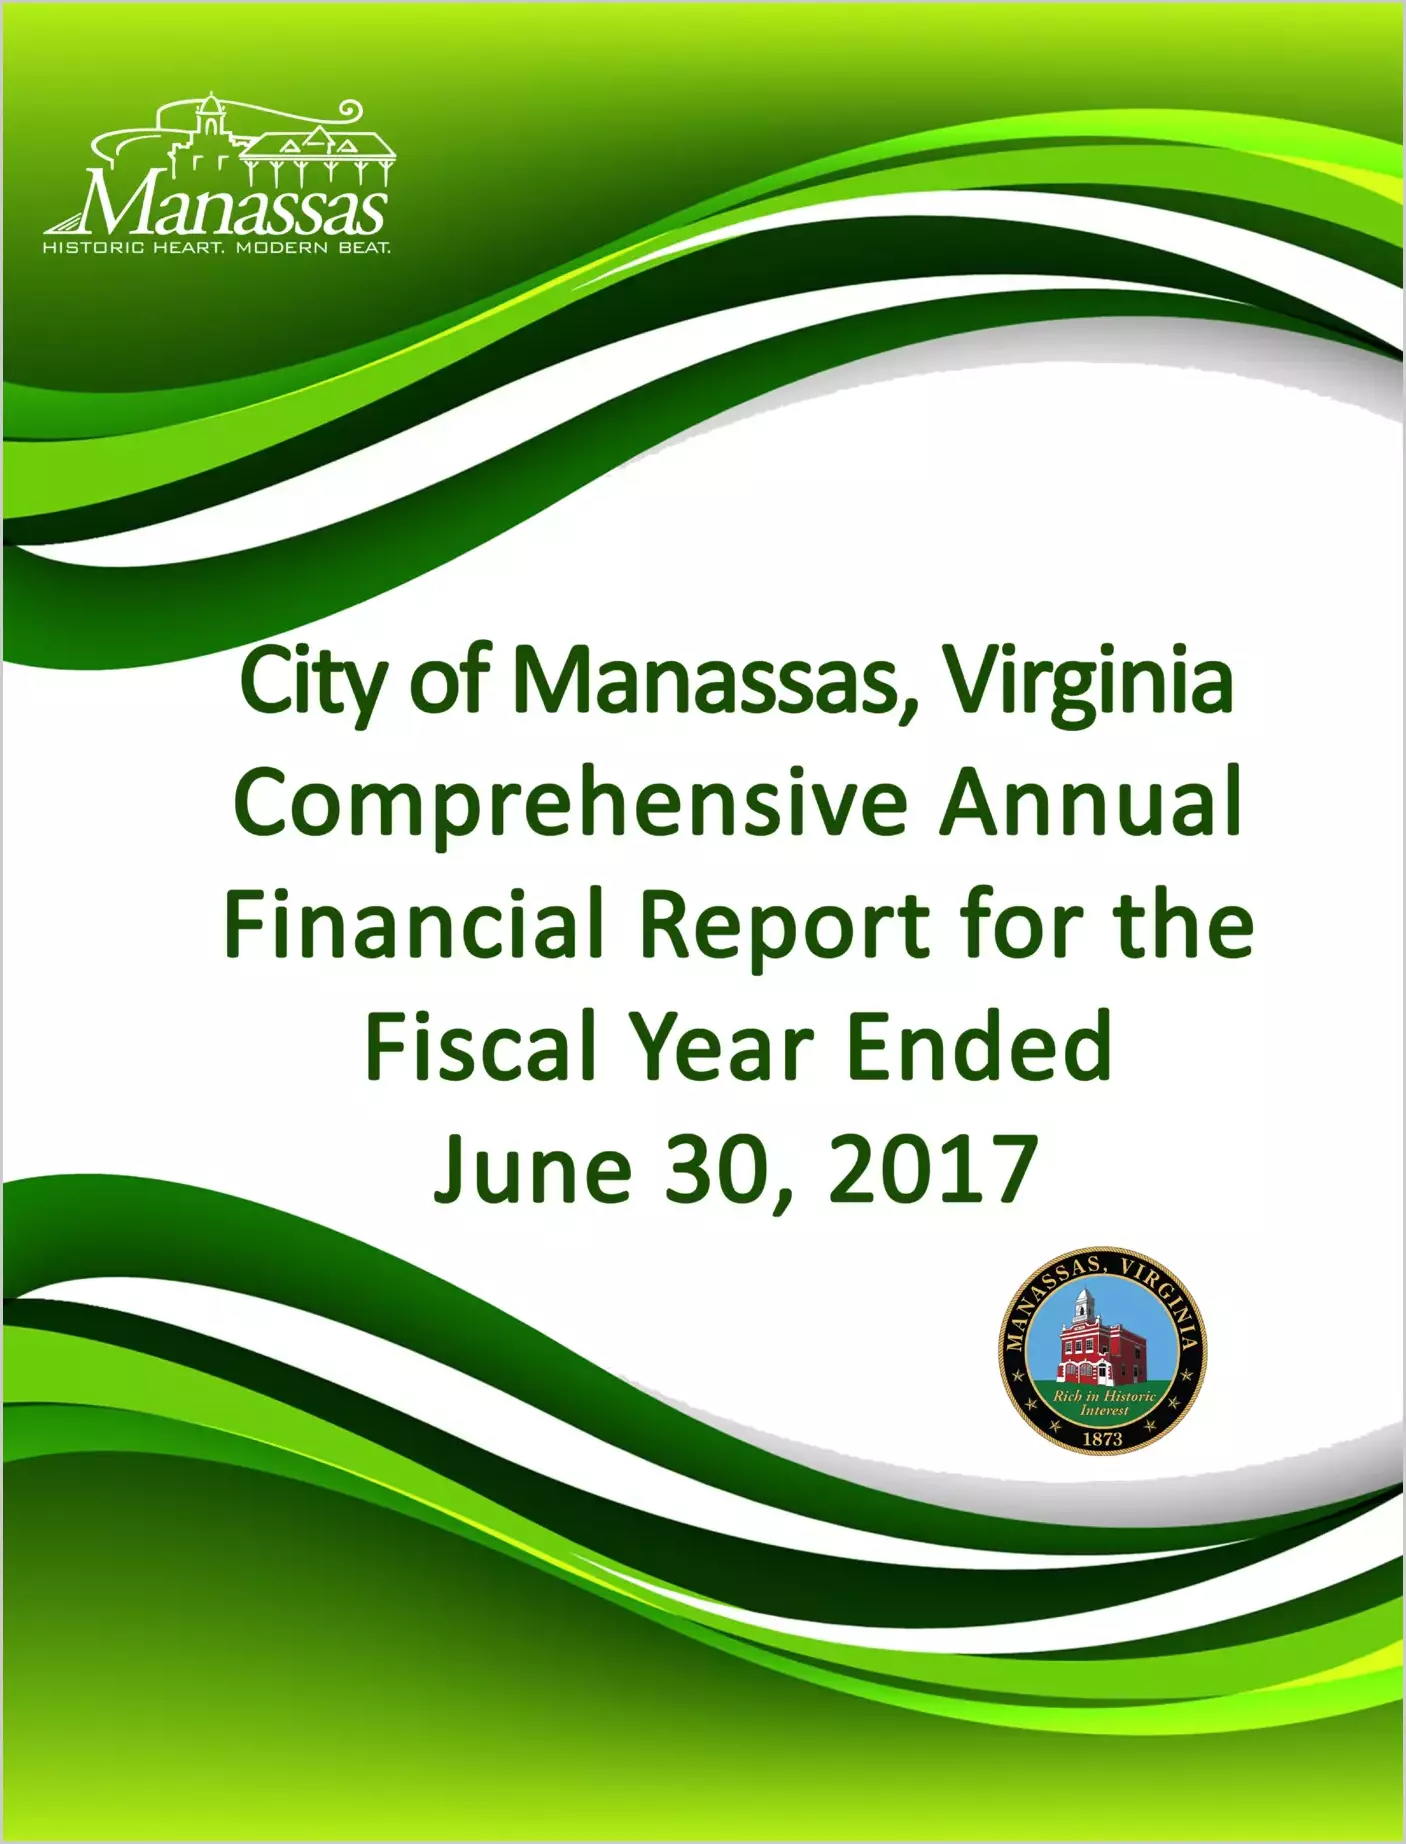 2017 Annual Financial Report for City of Manassas